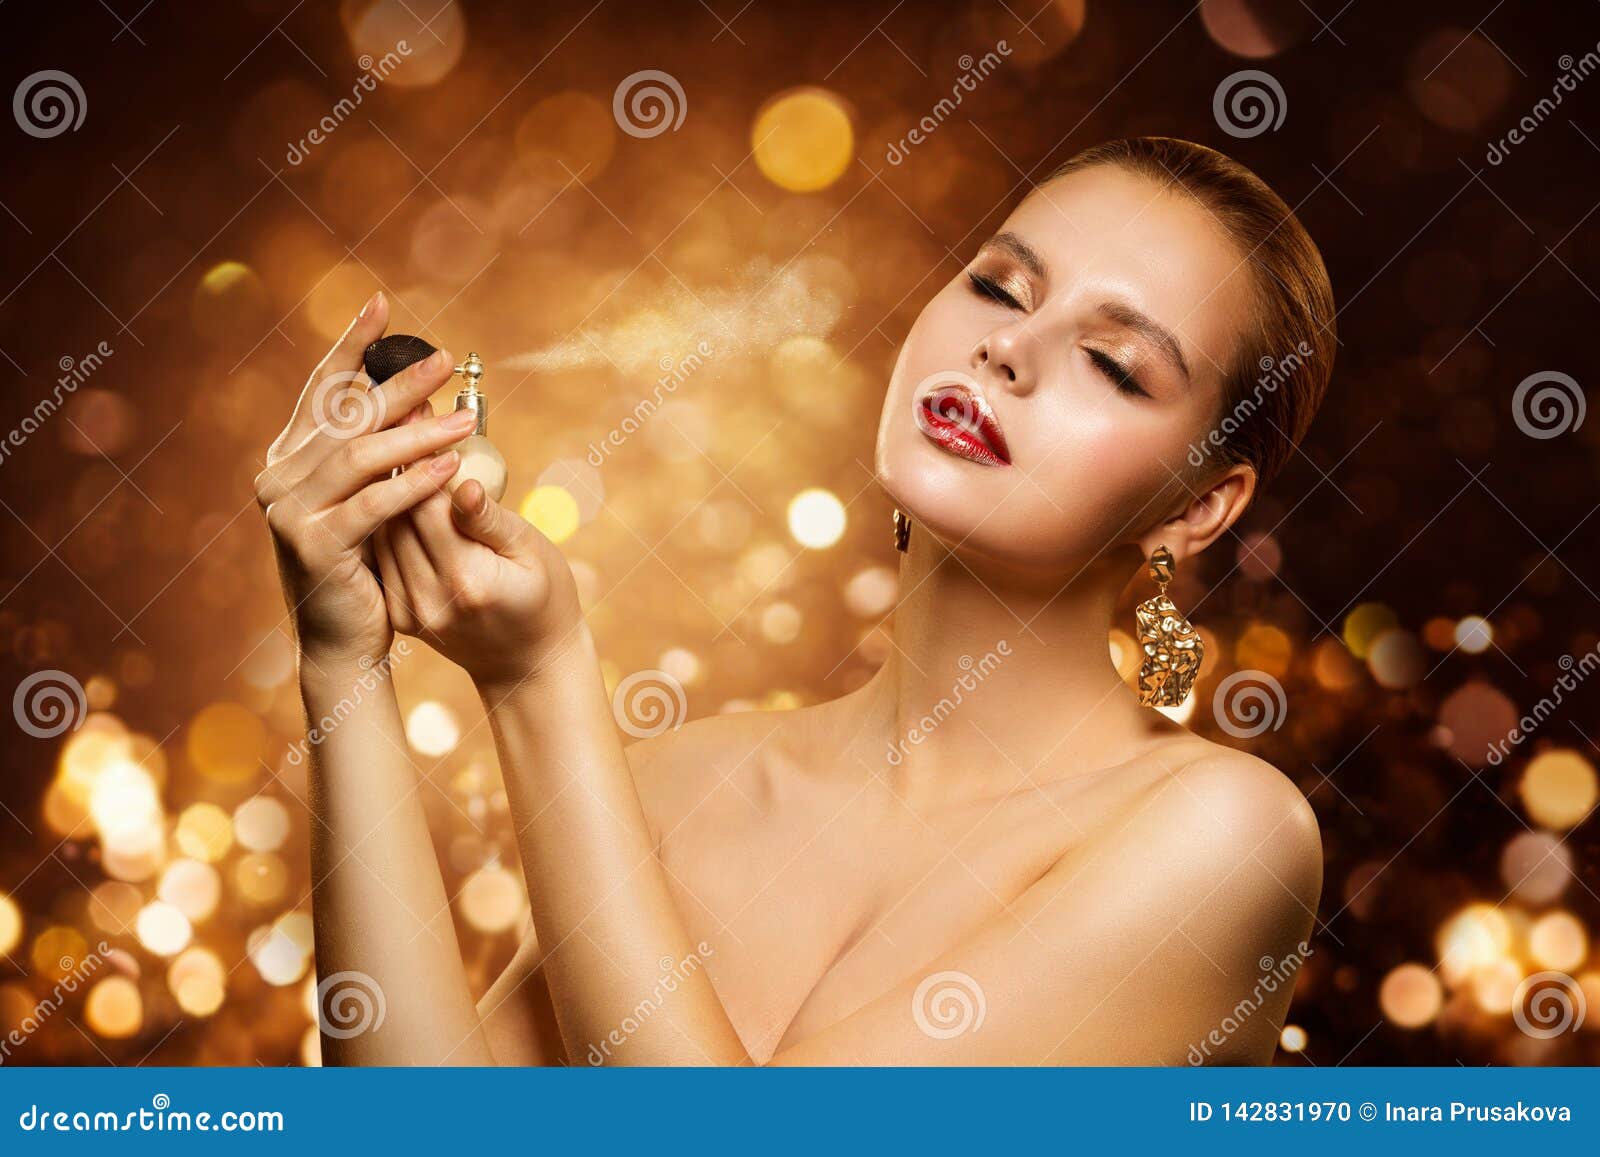 perfume, luxury woman spraying fragrance, aroma and fashion model